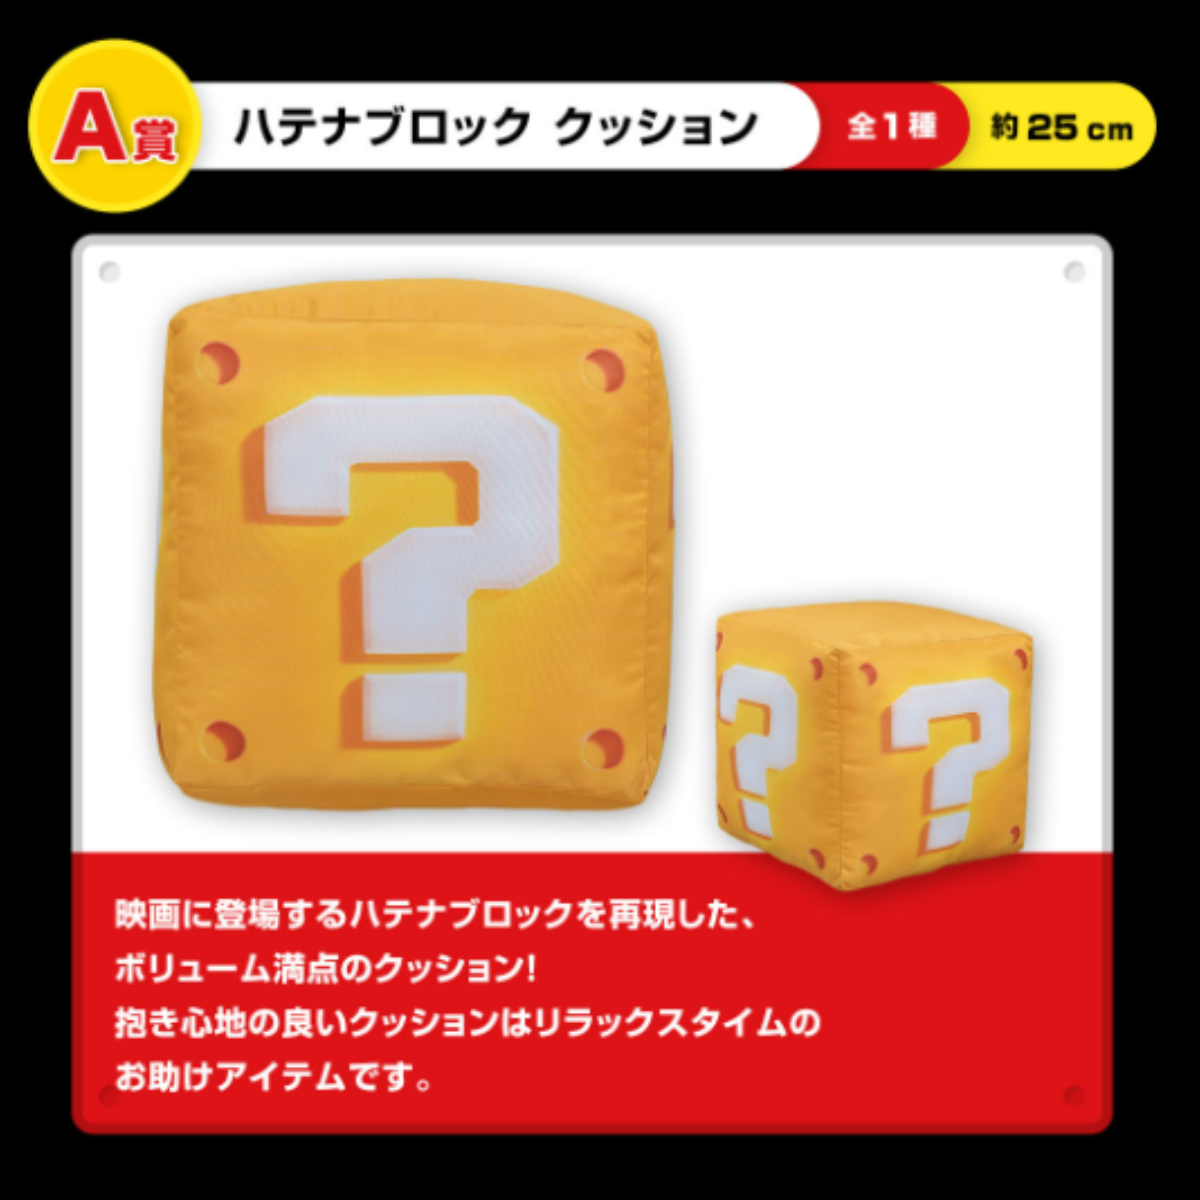 Ichiban Kuji The Super Mario Bros. Movie-Bandai-Ace Cards & Collectibles